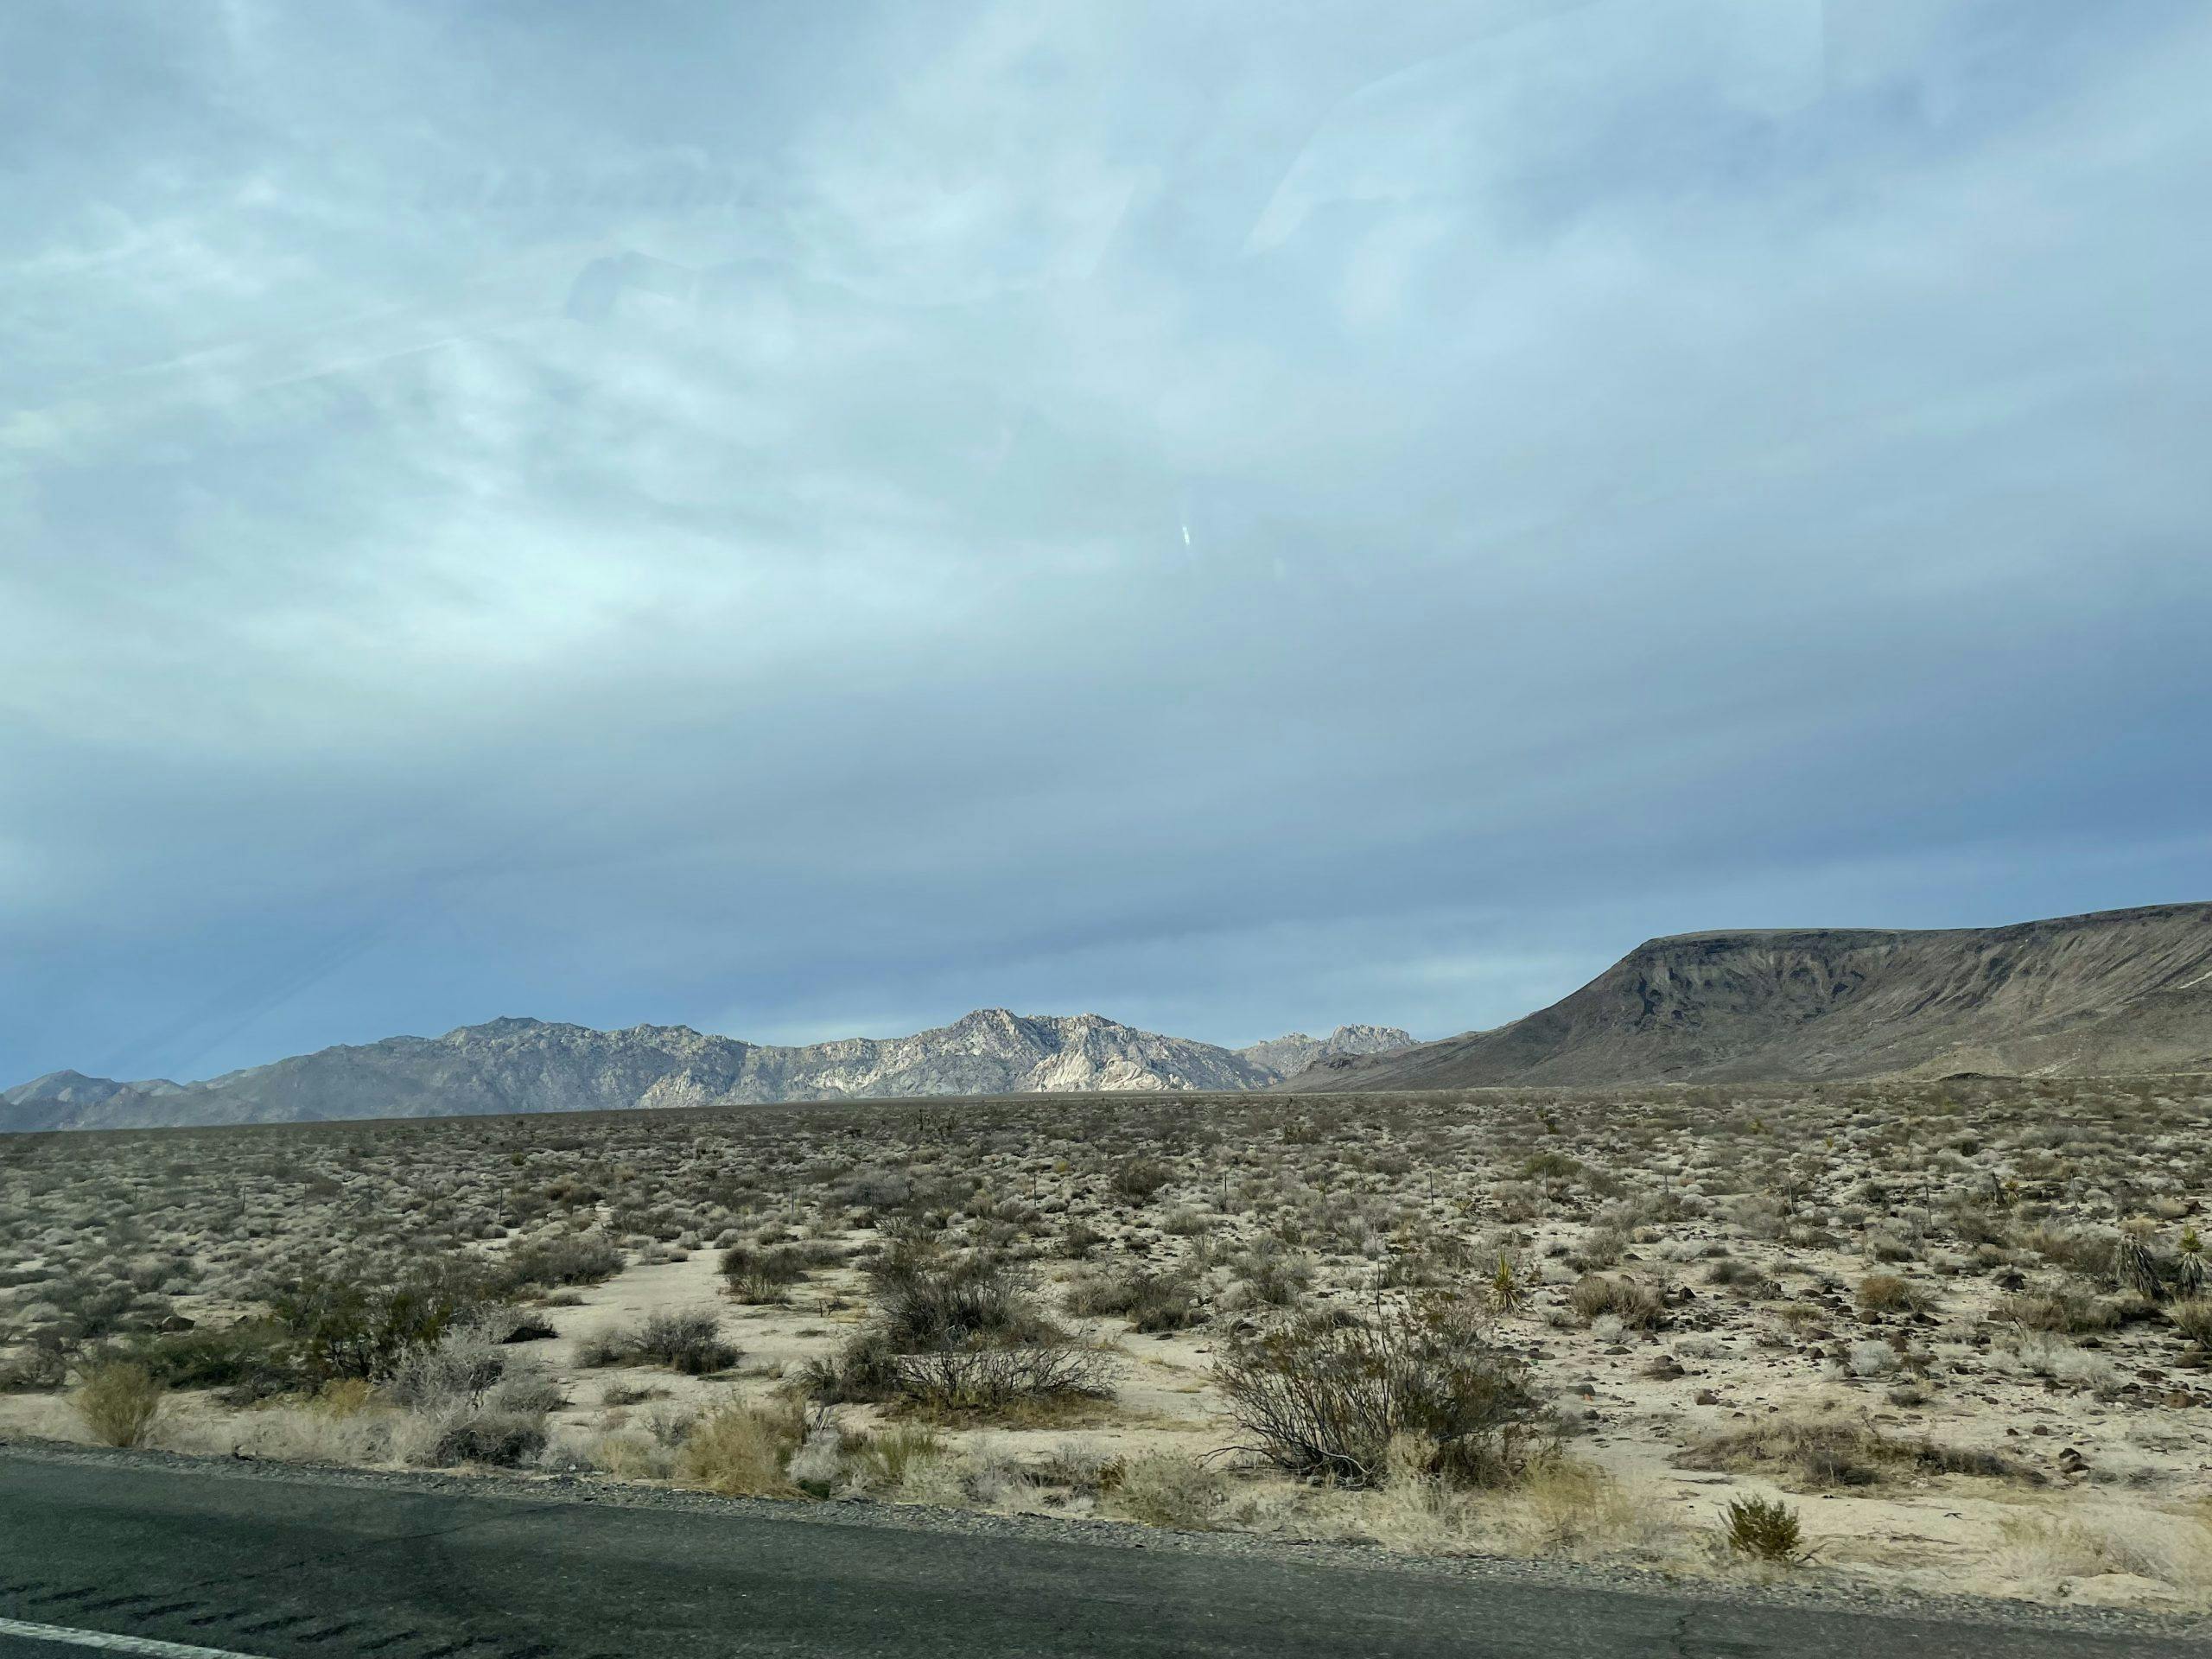 Arizona desert foothills